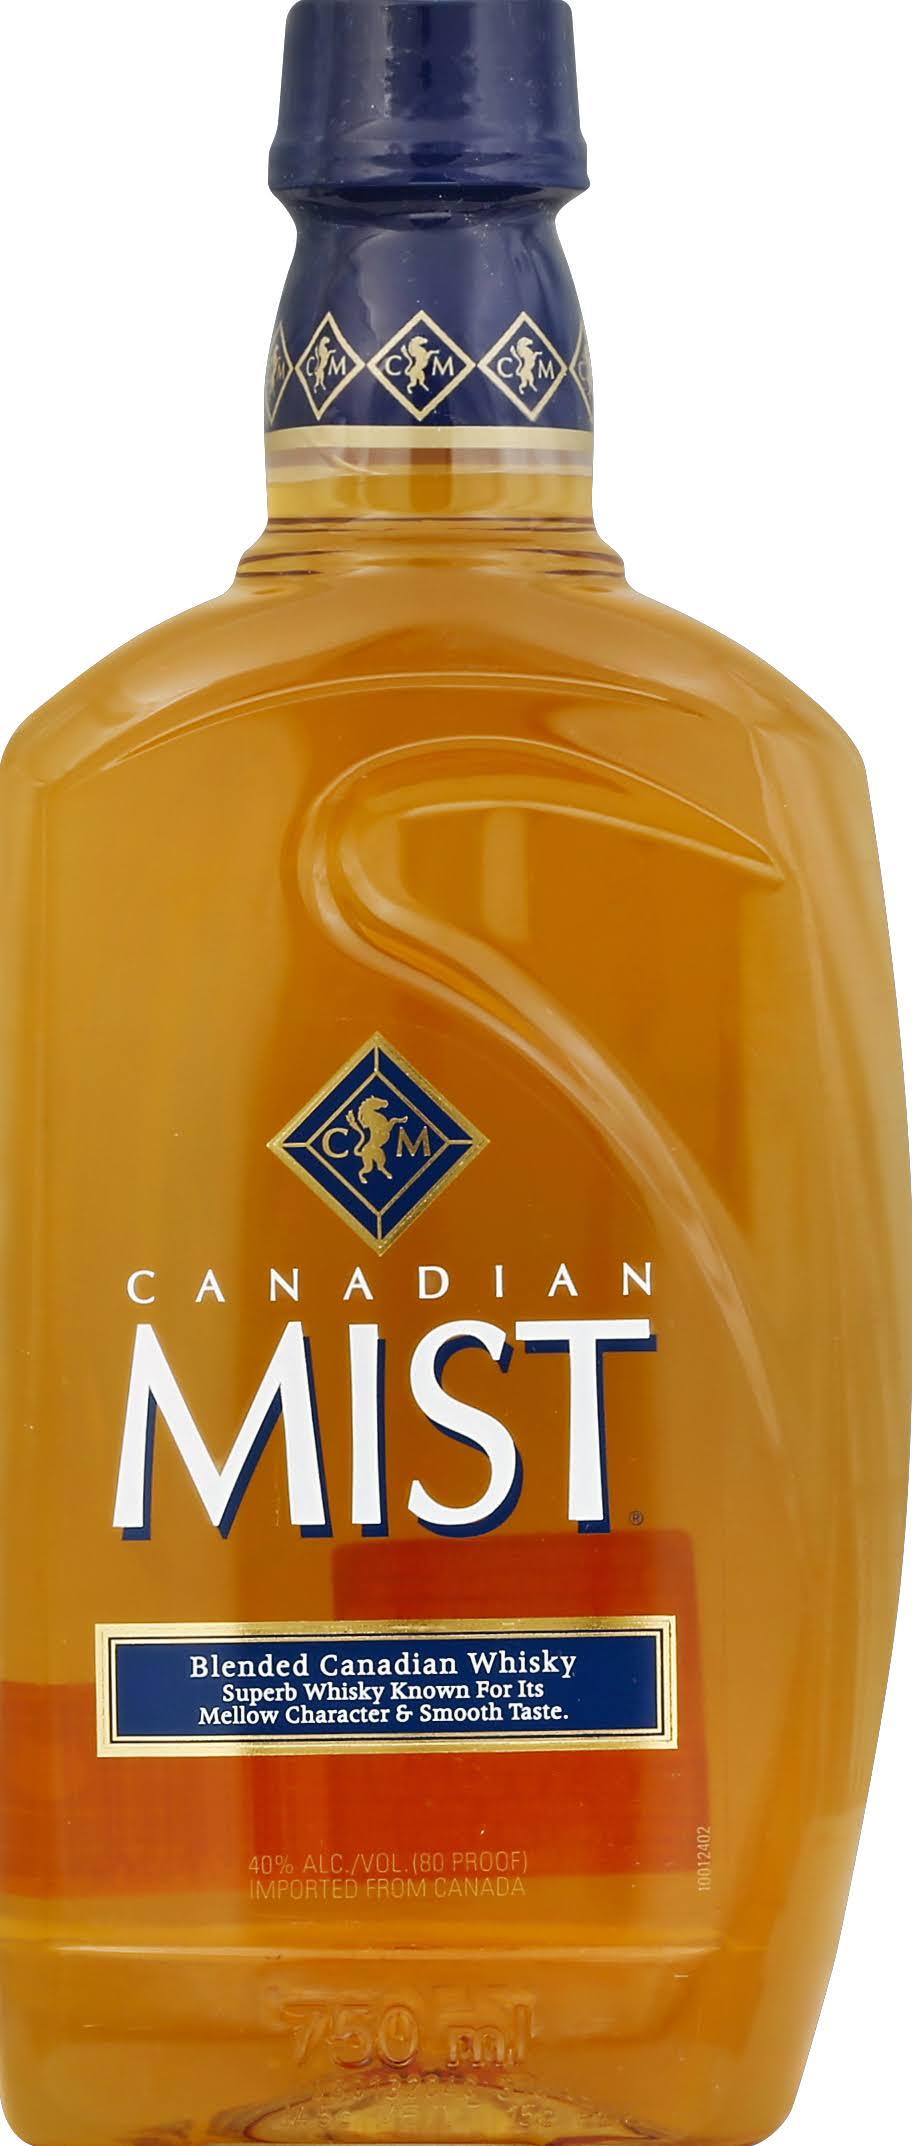 Canadian Mist - Canadian Whisky (750ml)